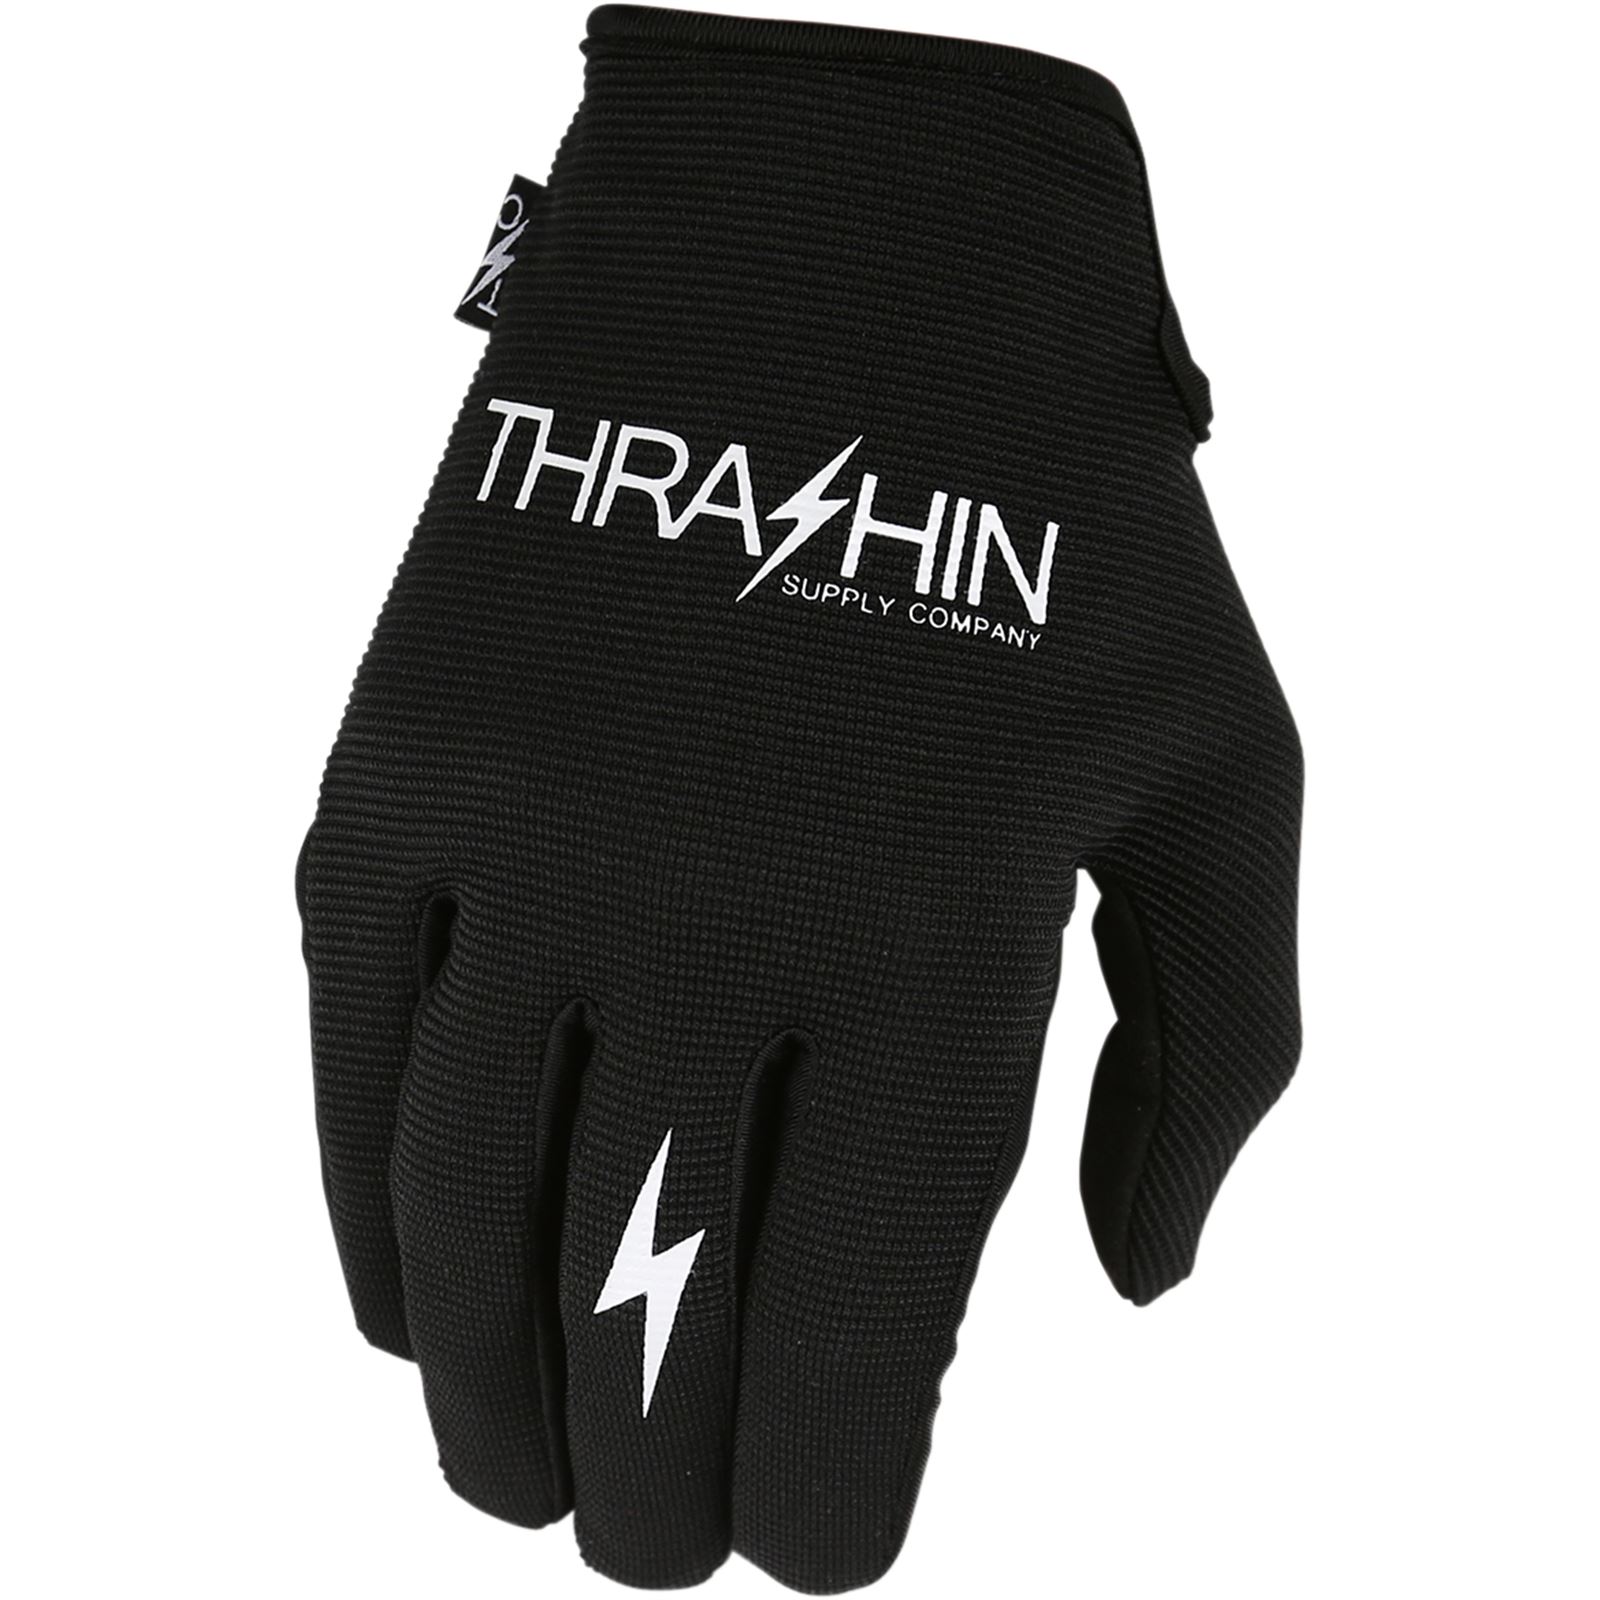 Thrashin Supply Company Stealth Gloves - Black/Black - X-Small